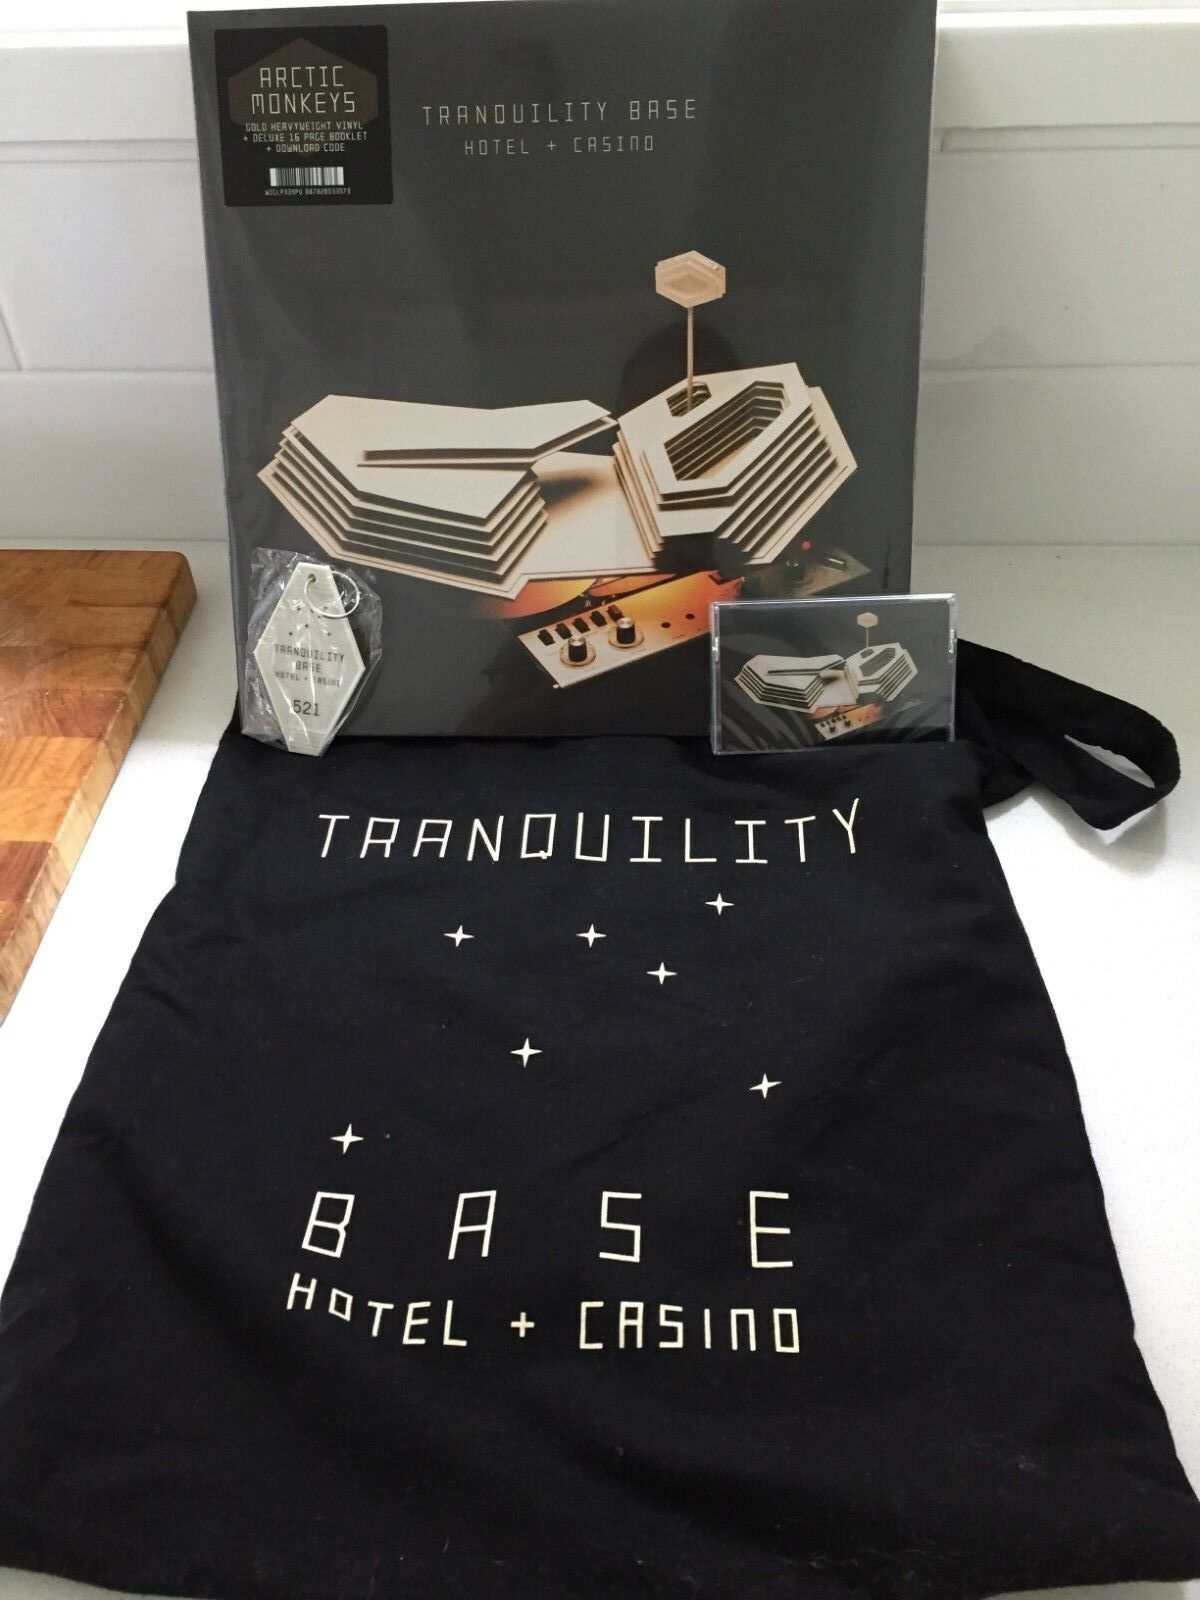 Arctic Monkeys - Tranquility Base Hotel + Casino Vinilo